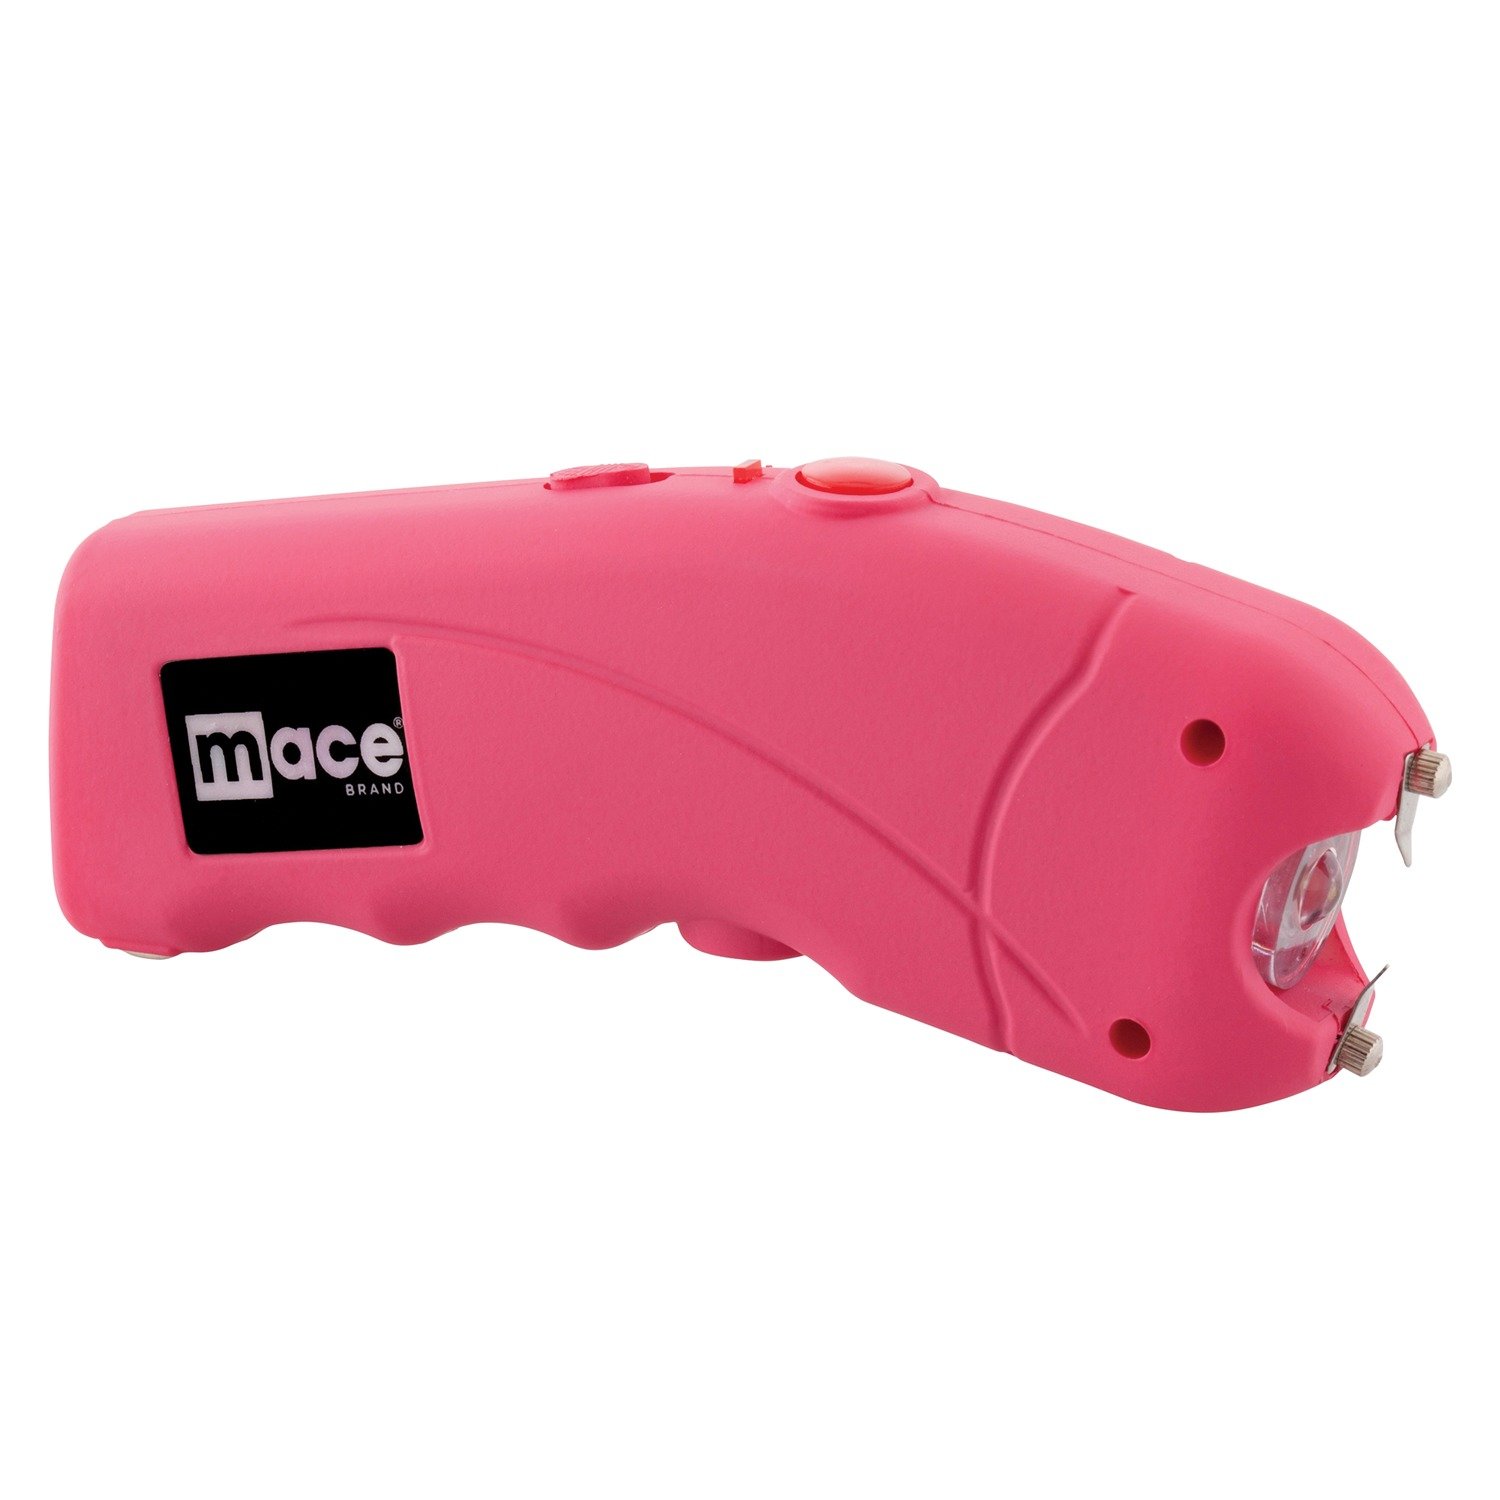 MACE 80814 Ergo Stun Gun with LED (Pink)